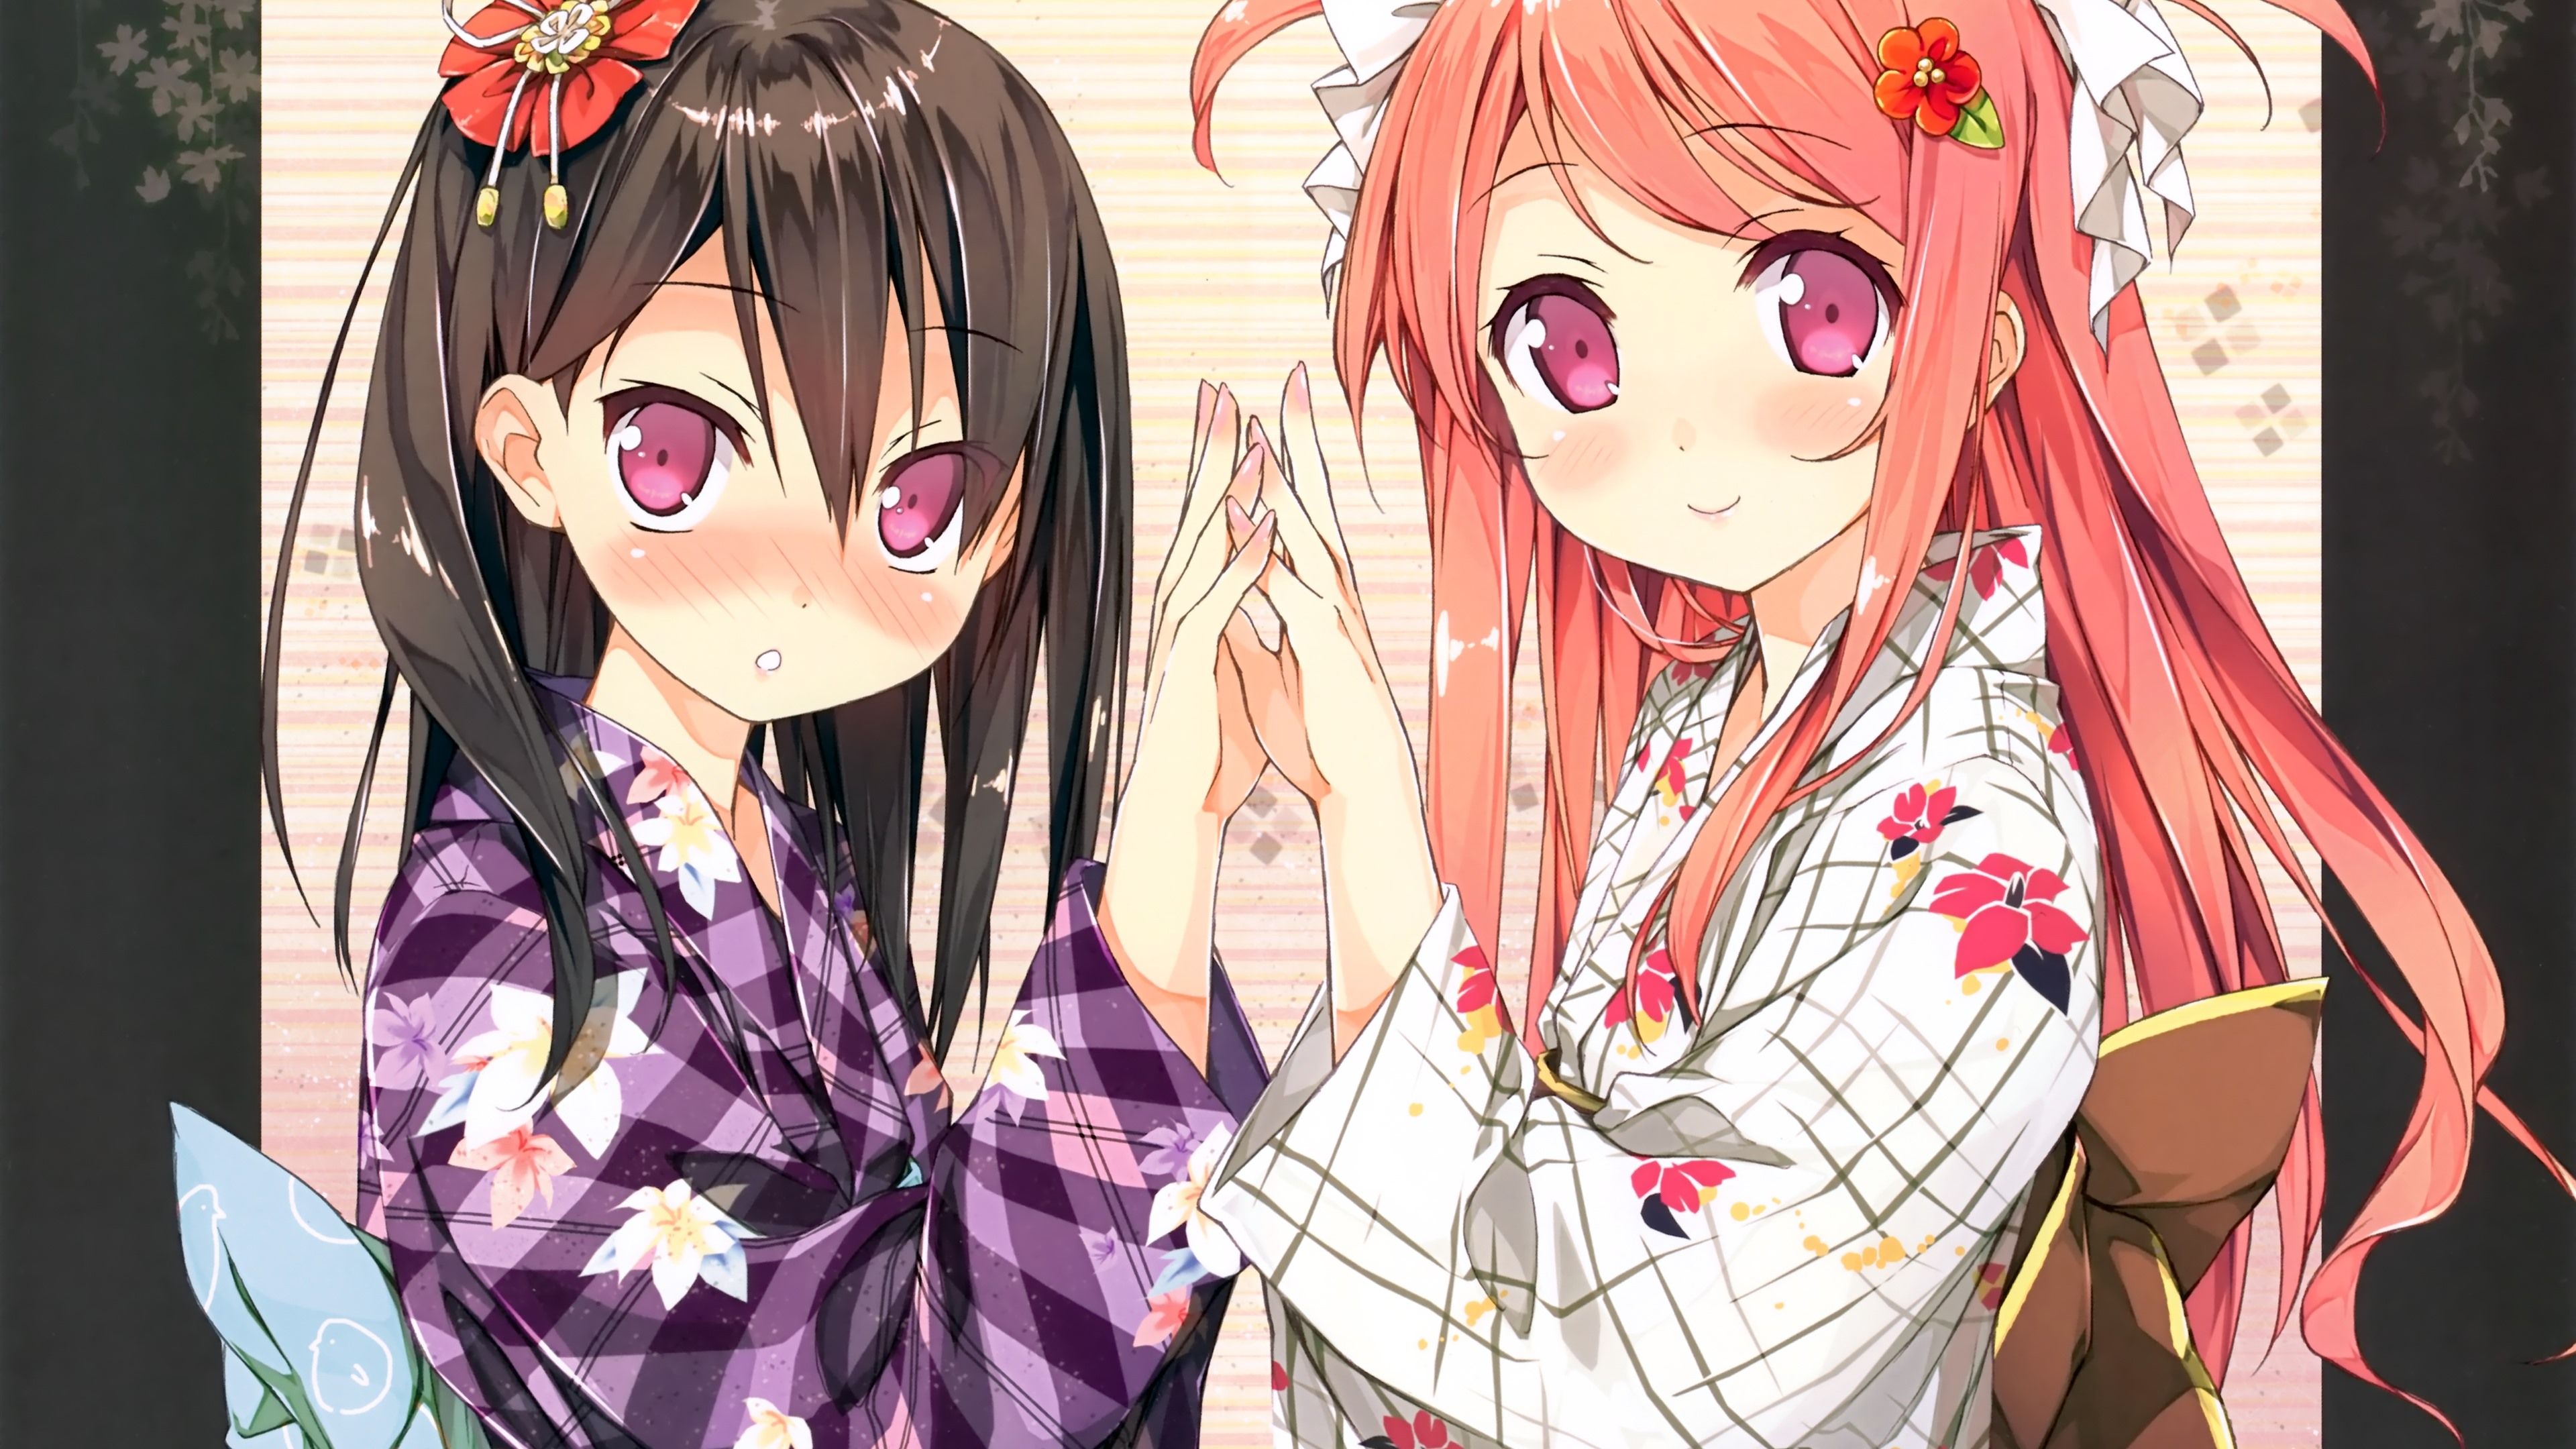 Wallpaper Two anime girls, kimono 3840x2160 UHD 4K Picture, Image